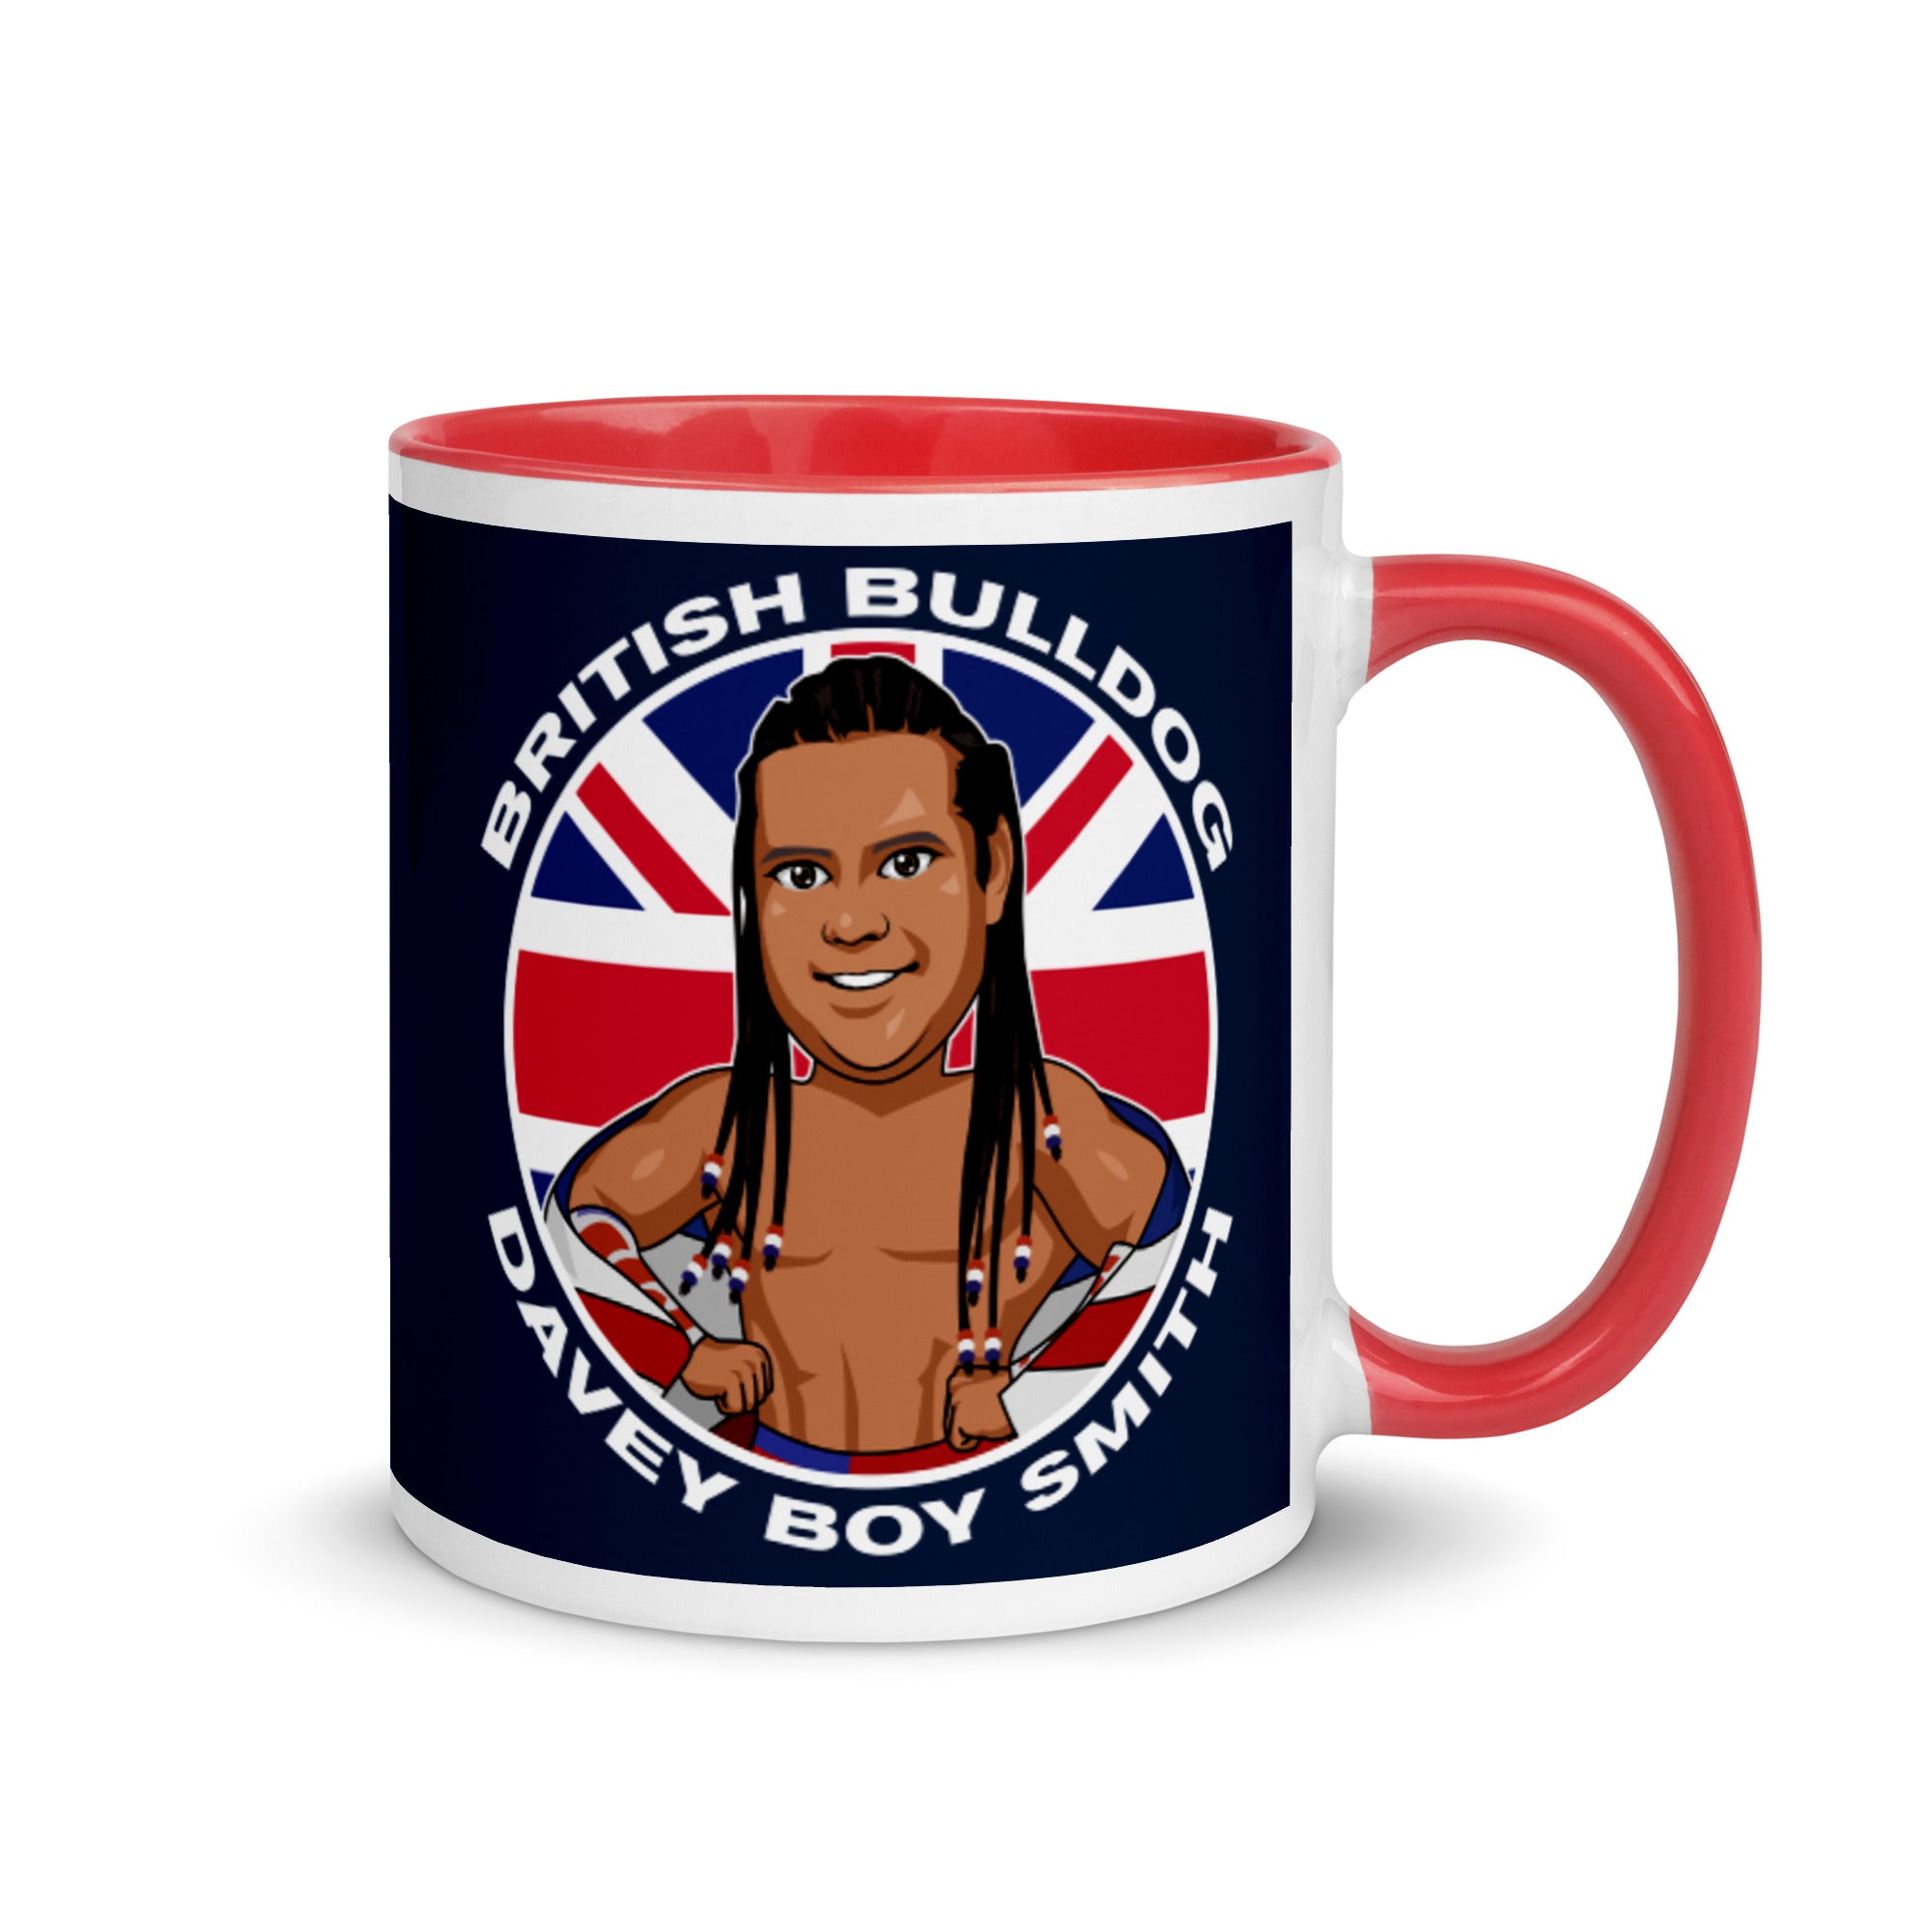 British Bulldog Cartoon Mug with Color Inside